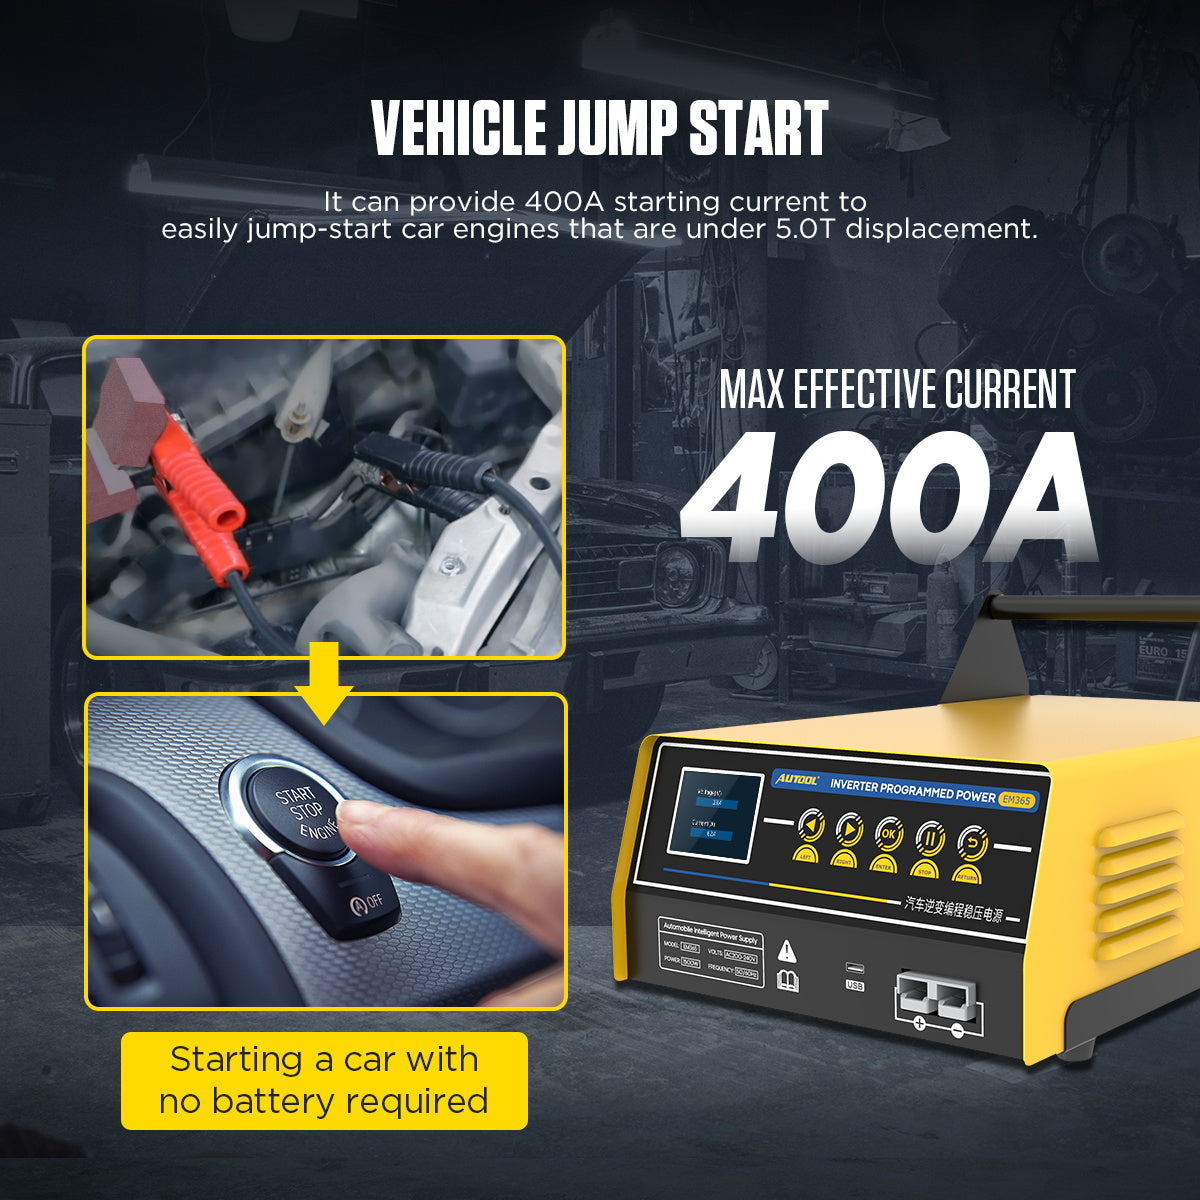 AUTOOL EM365 150A ECU Programming Power Supply & 12V Battey Charger & Car Jump Starter